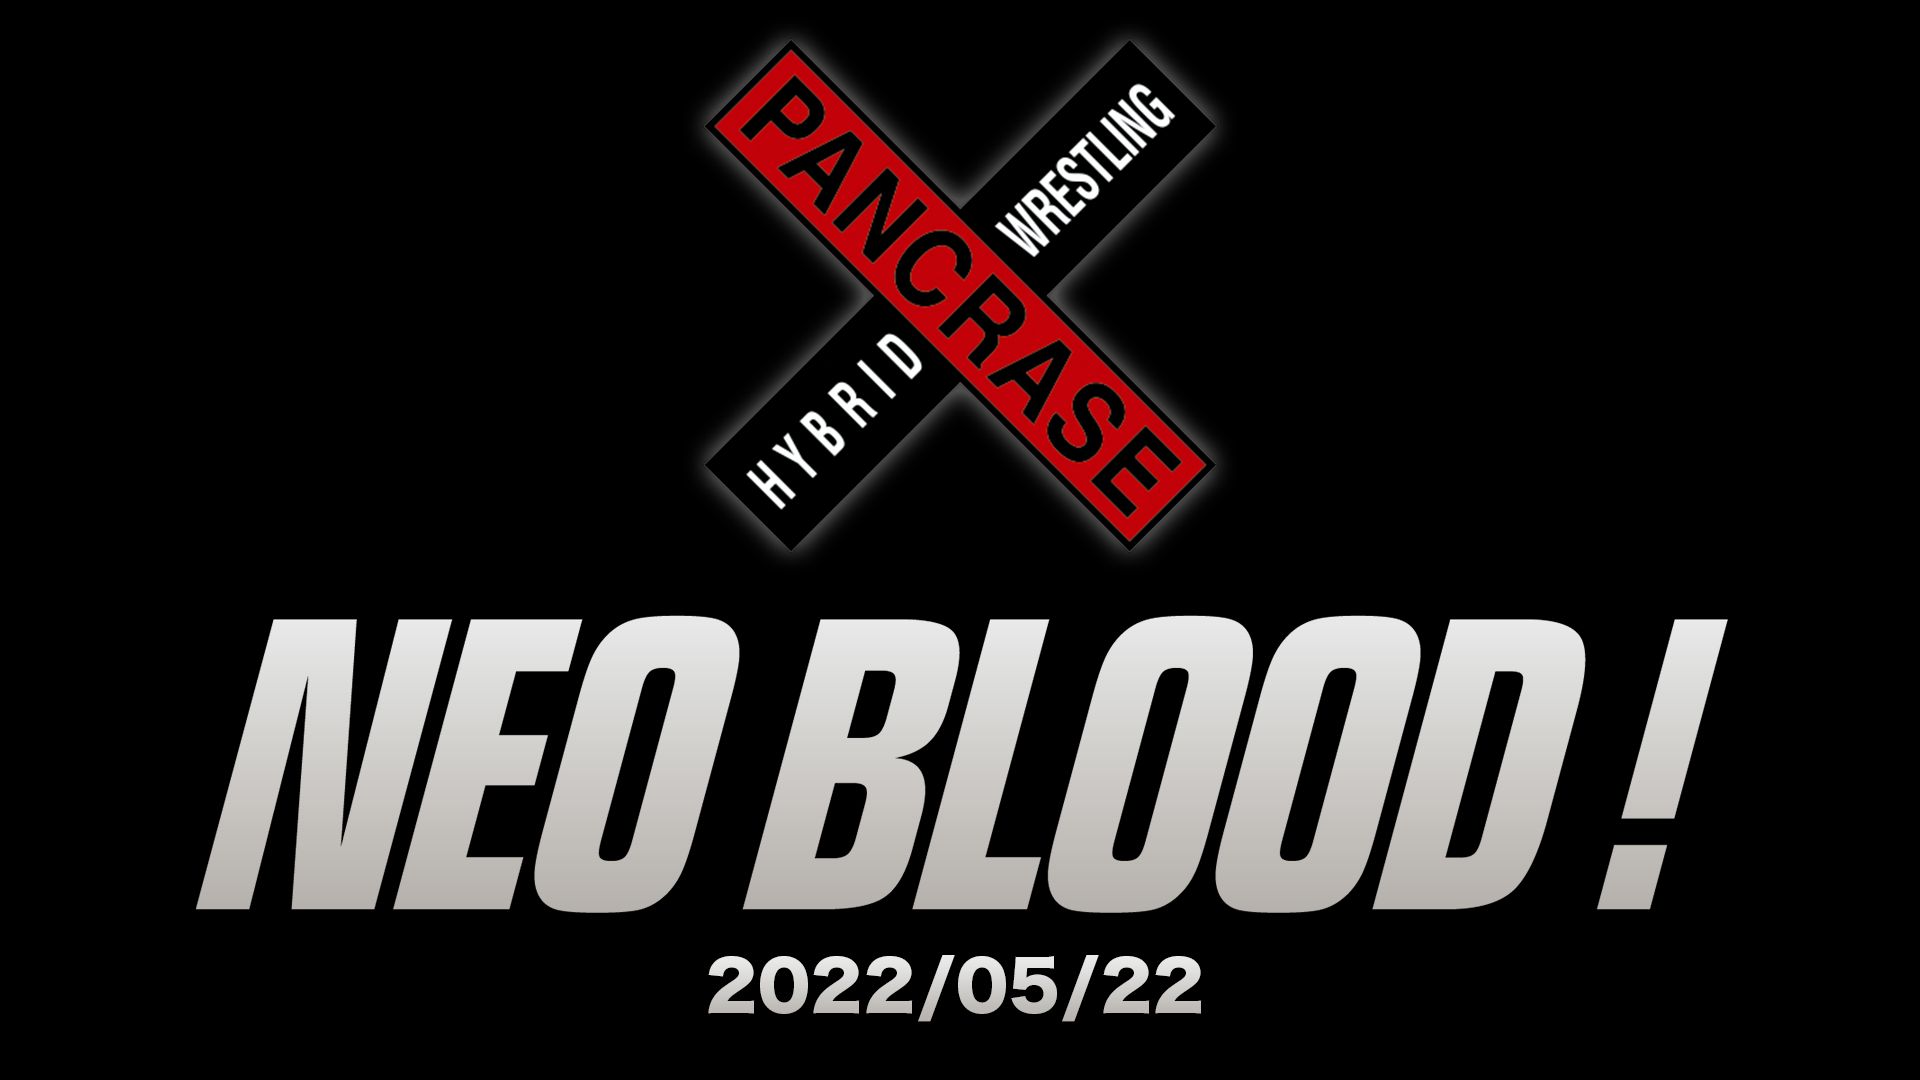 NEO BLOOD！ 2022/05/22